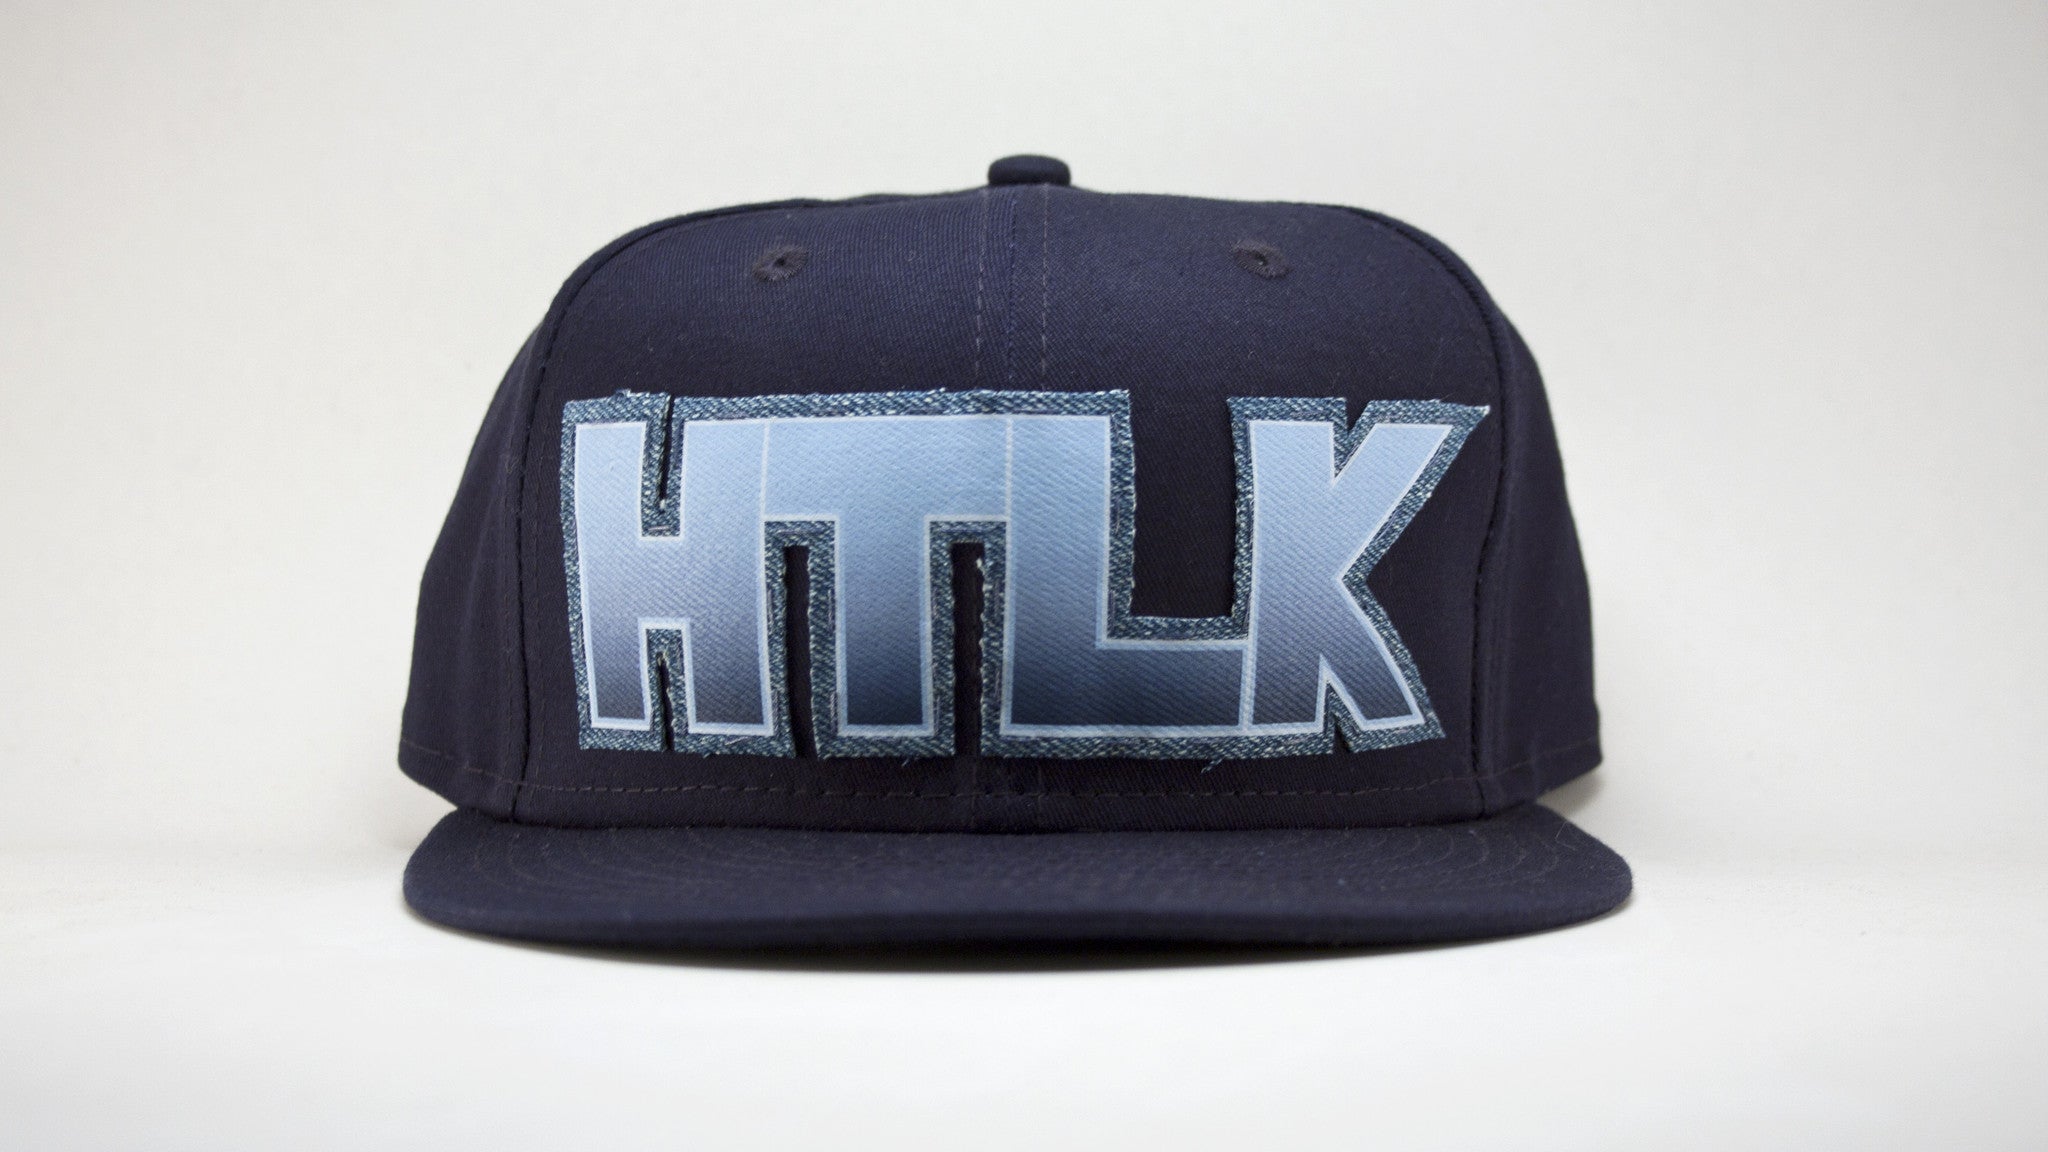 HTLK: Be Bold - Hat